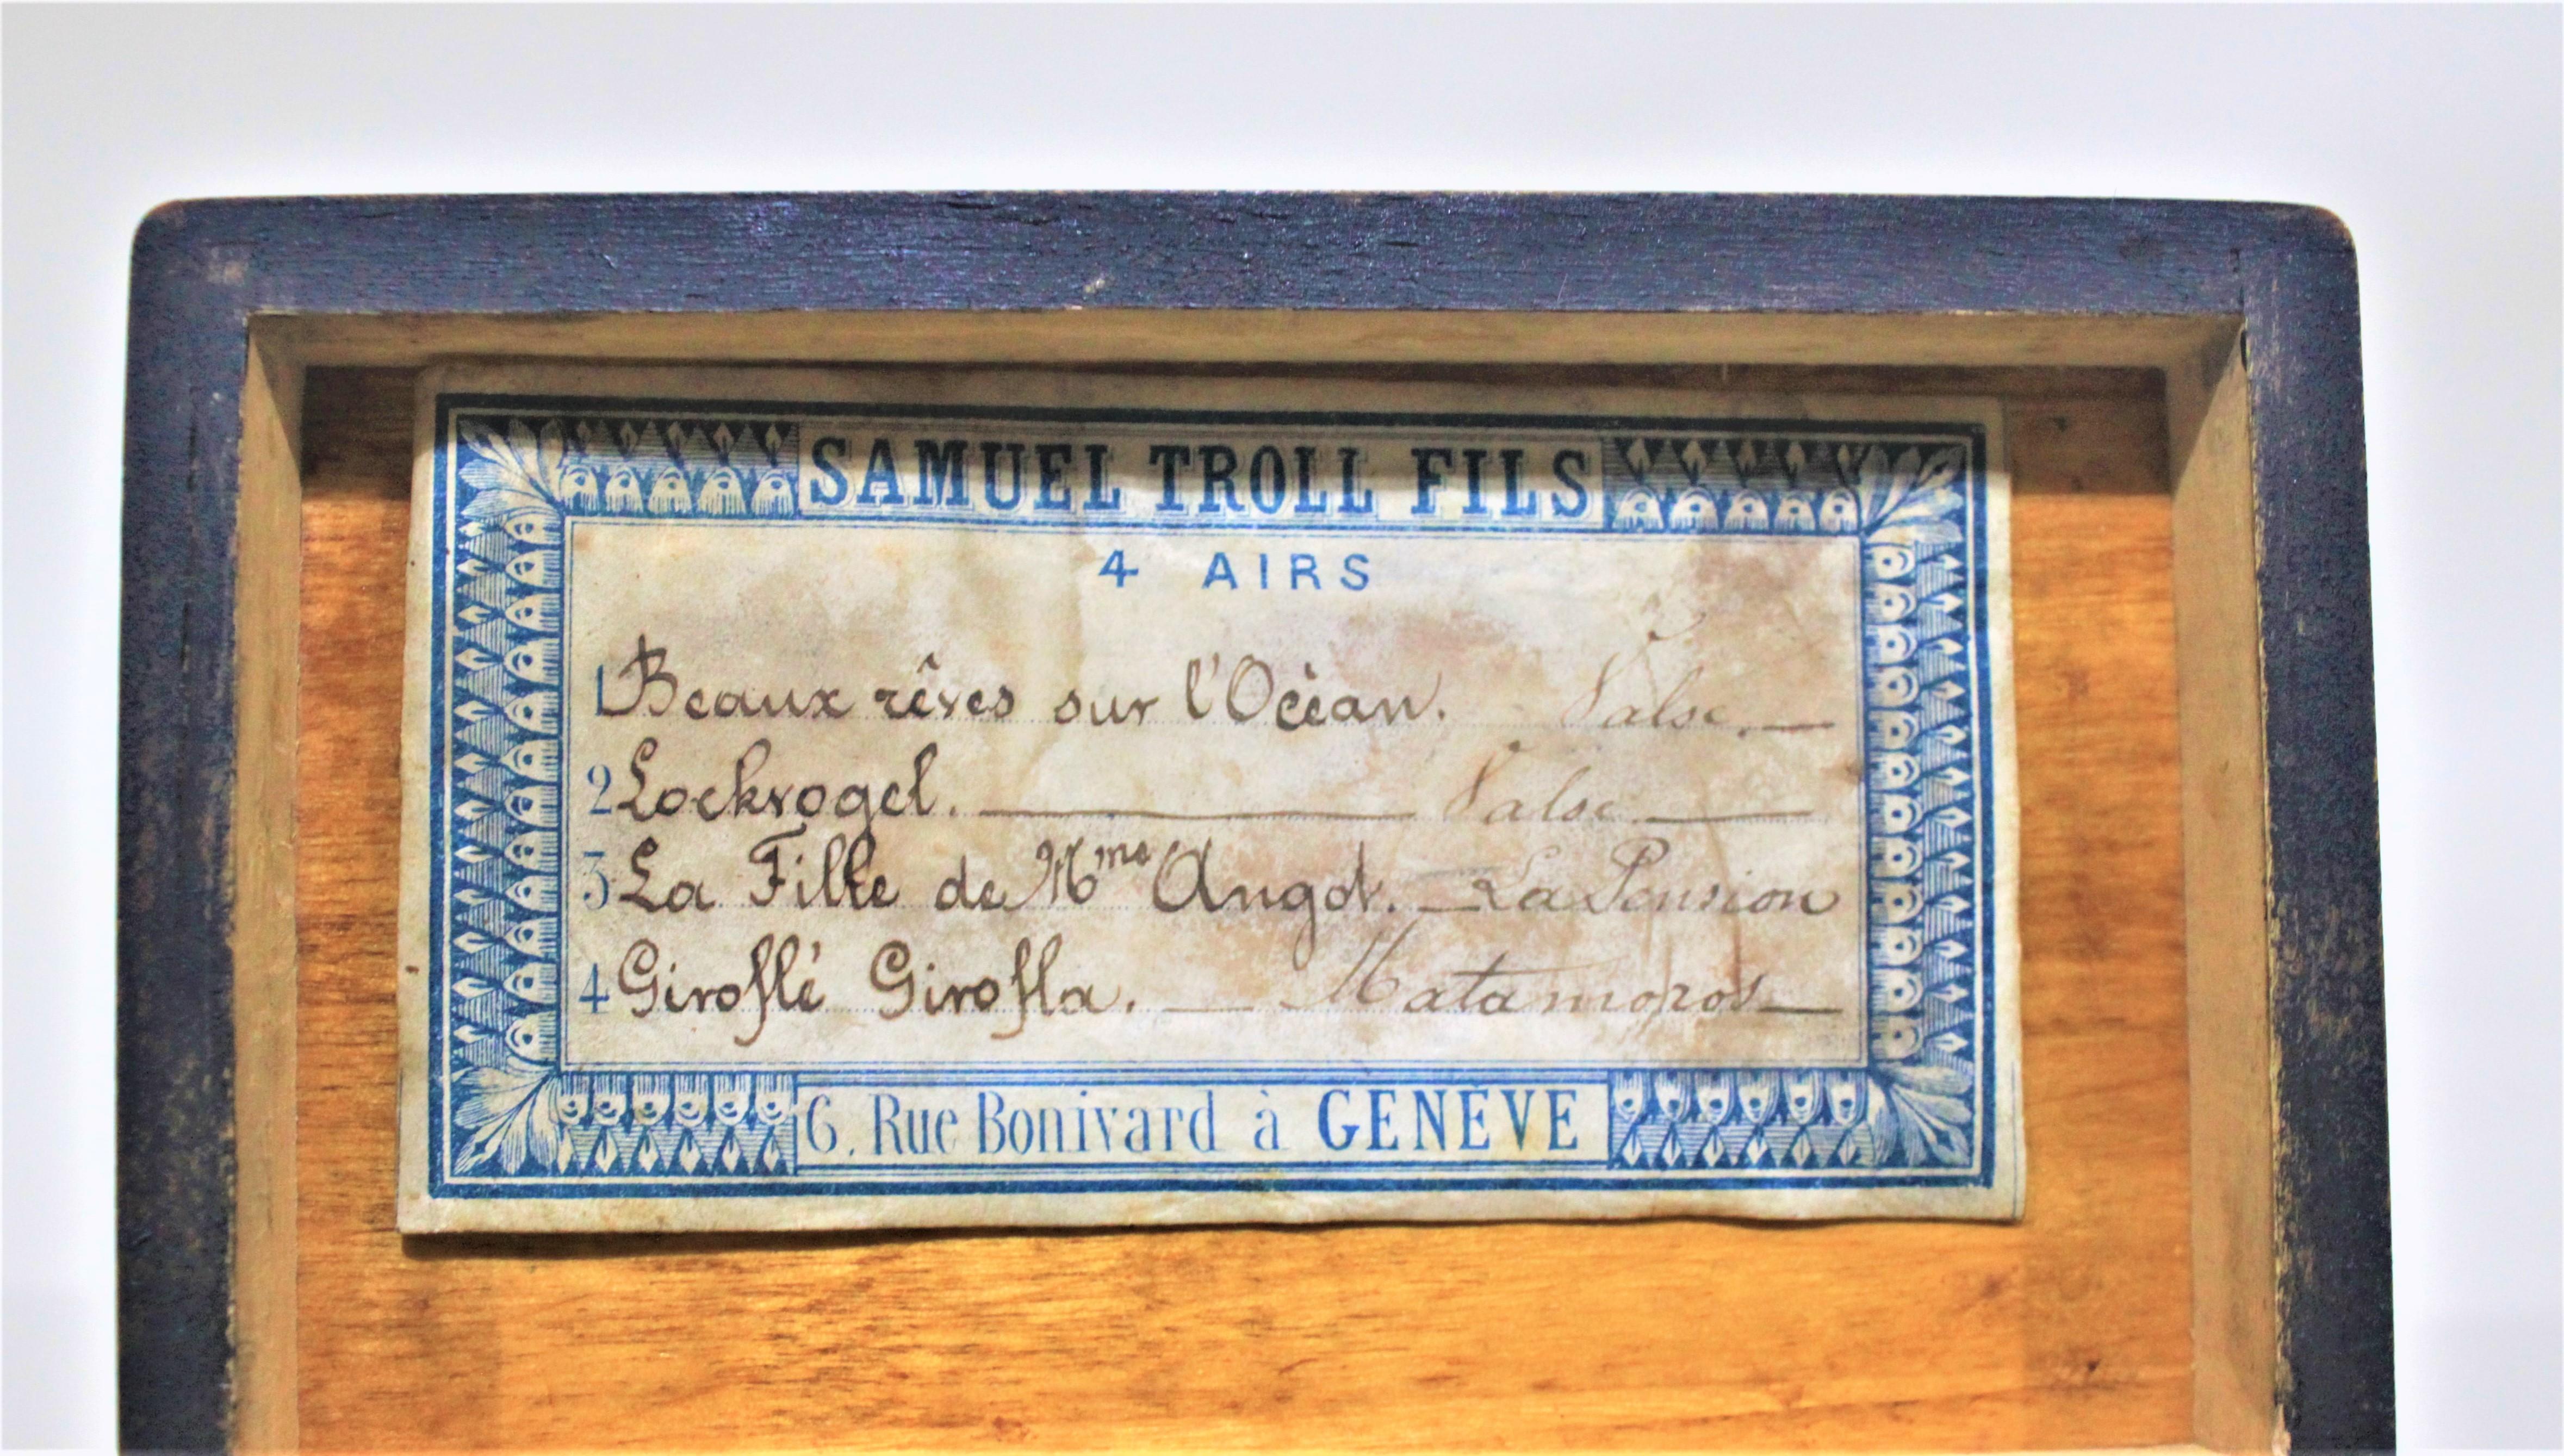 19th Century Antique Swiss Samuel Troll Fils Key Wind Cylinder Music Box For Sale